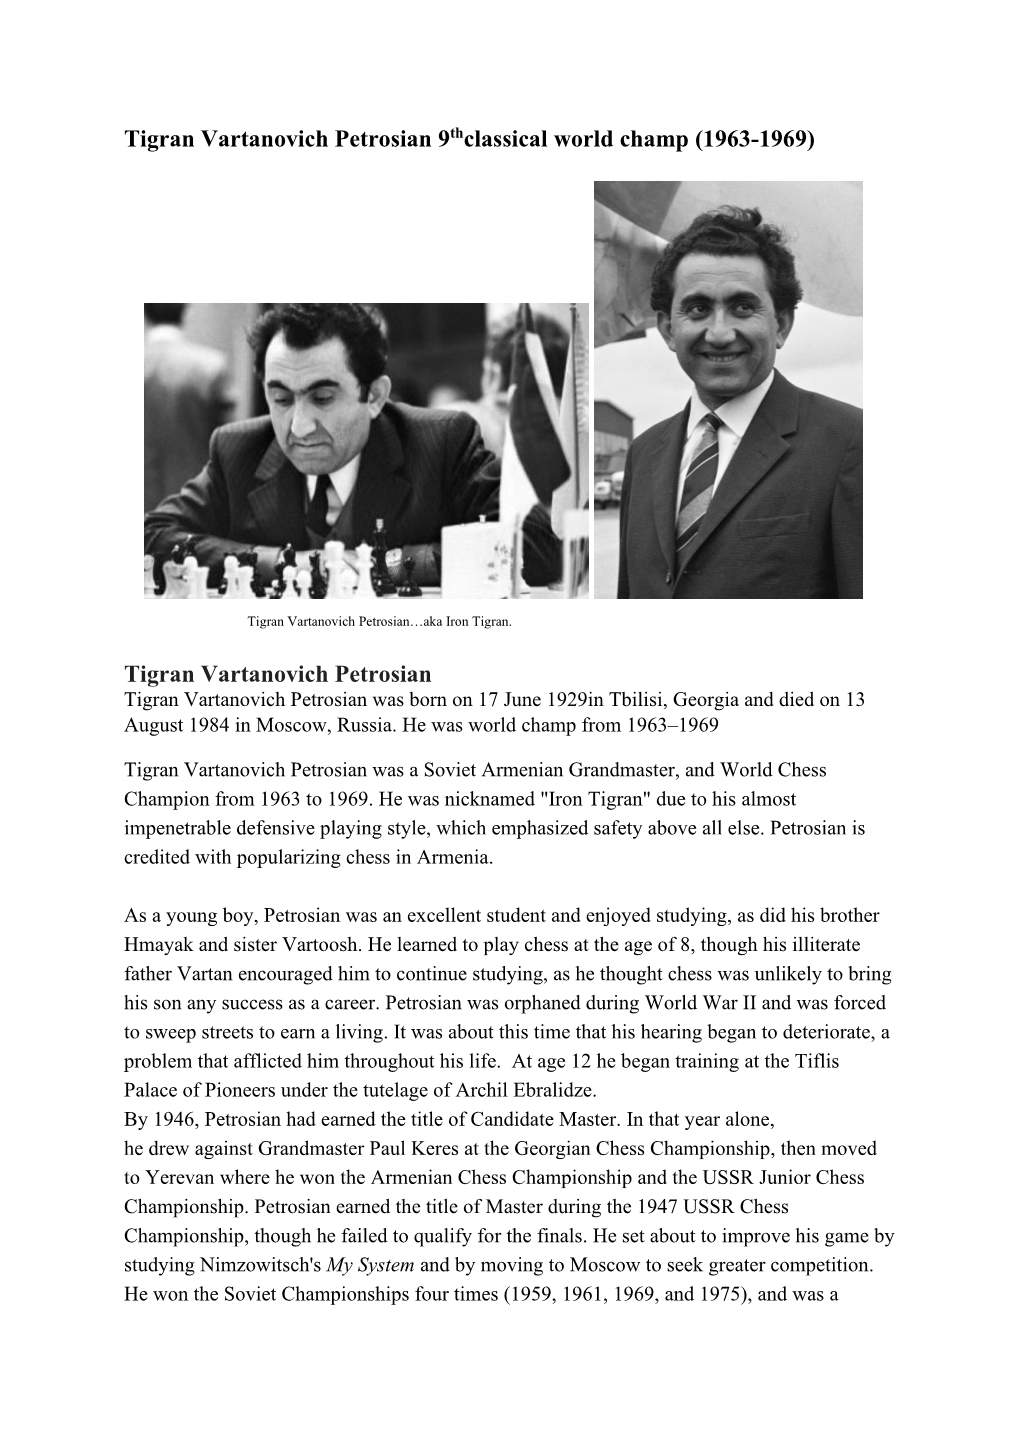 Tigran Vartanovich Petrosian 9Thclassical World Champ (1963-1969)